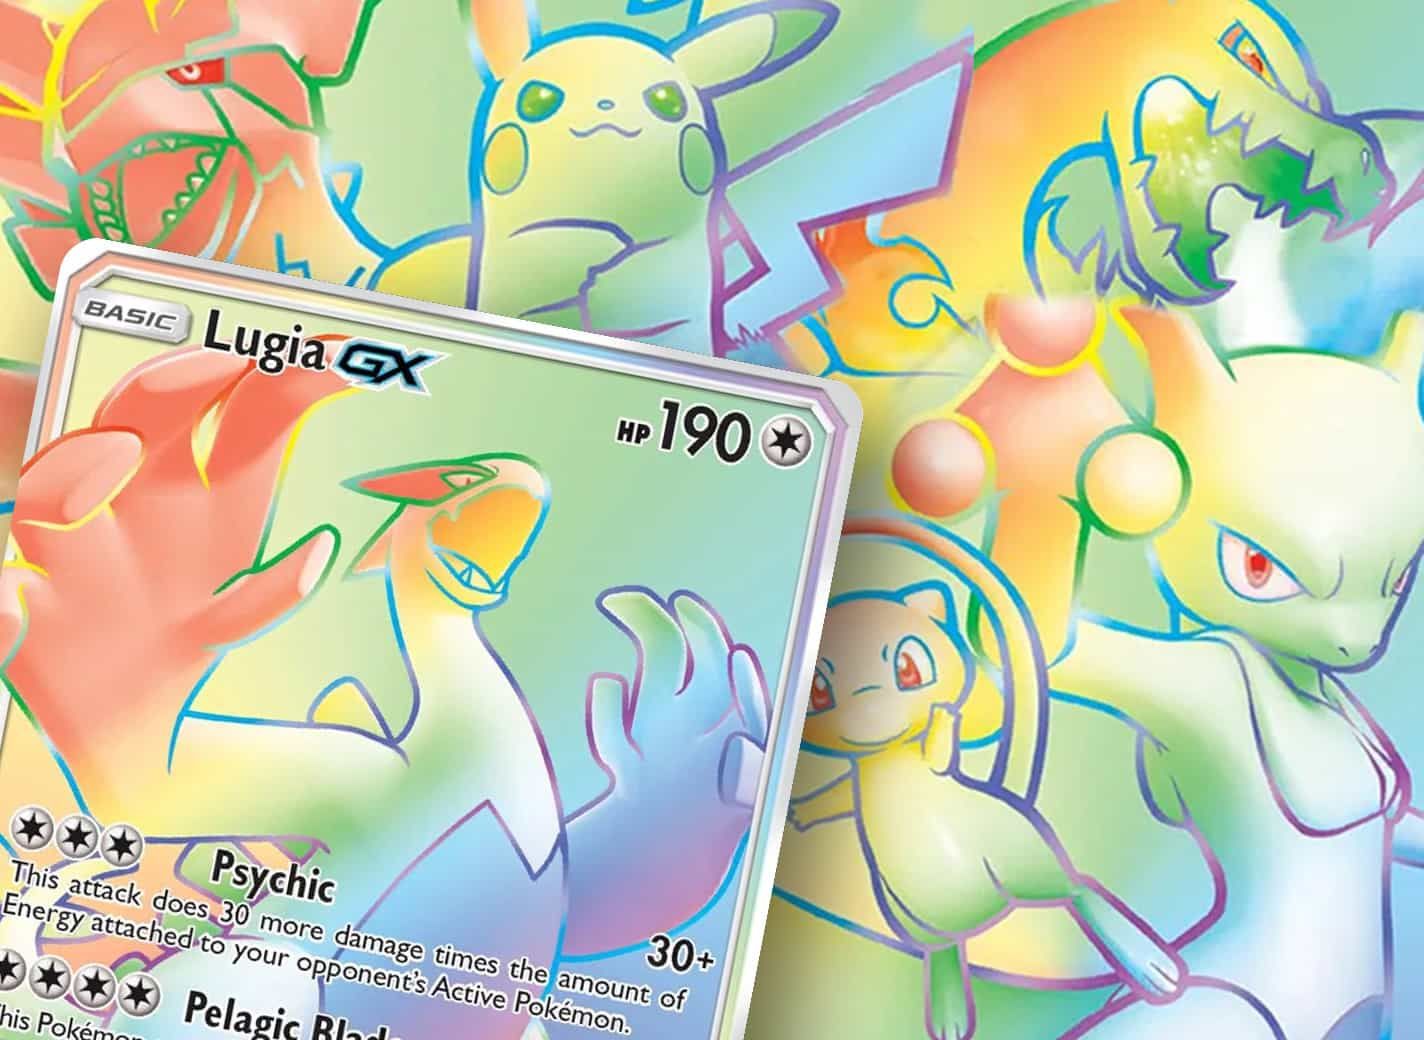 Pikachu VMax Gigantamax Silver Foil Pokemon Card 310hp